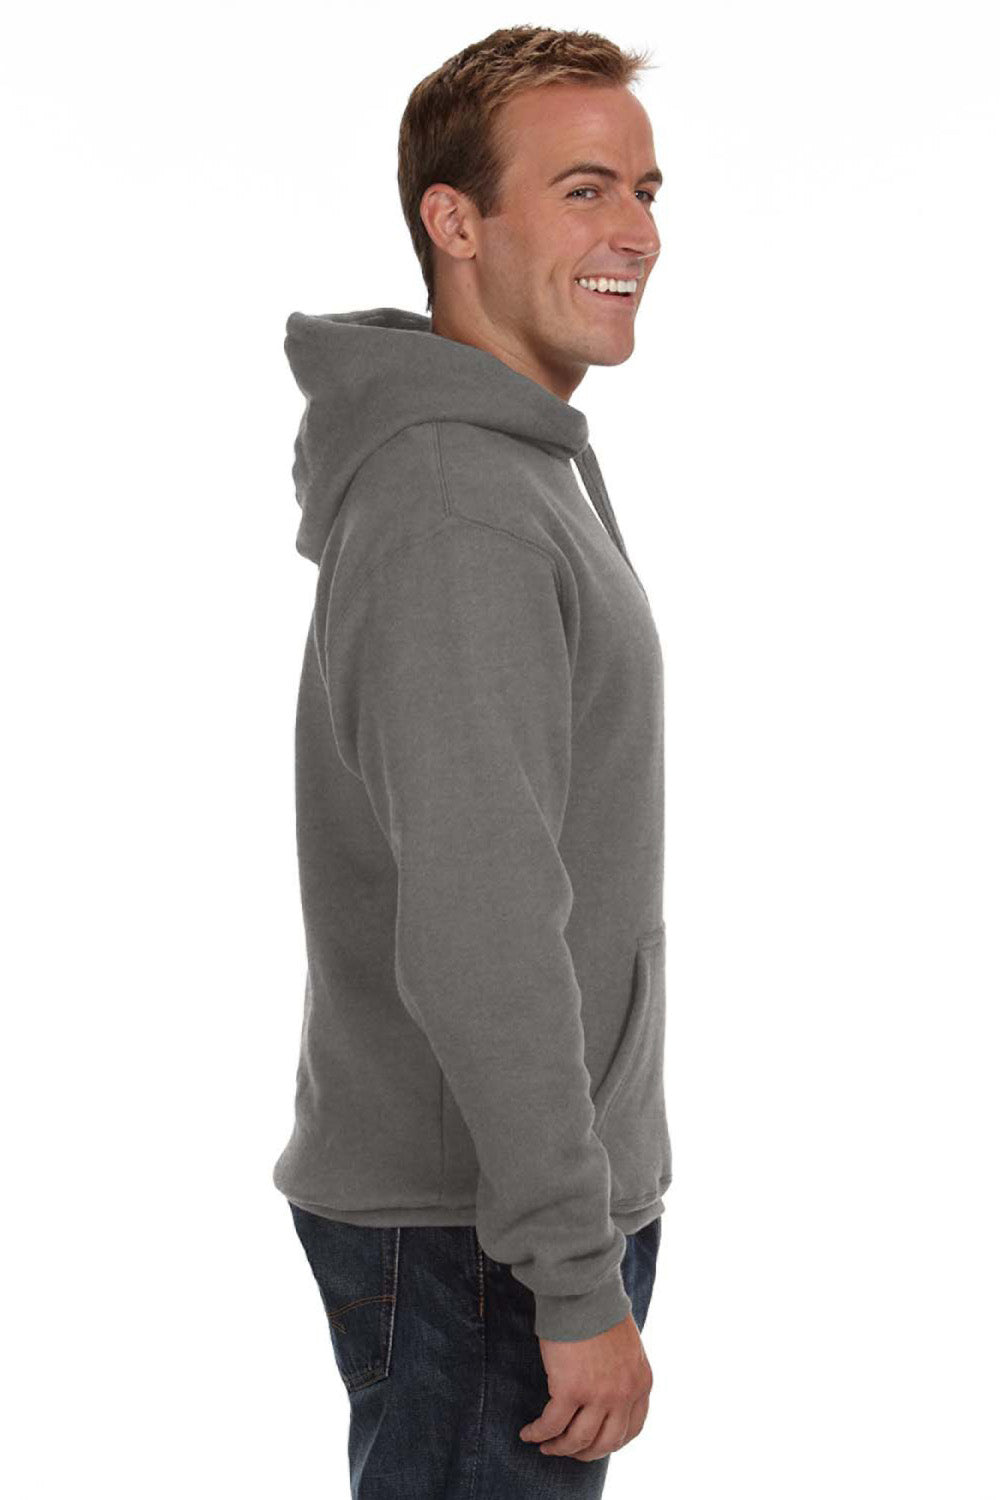 J America JA8824 Mens Premium Fleece Hooded Sweatshirt Hoodie Heather Charcoal Grey Side